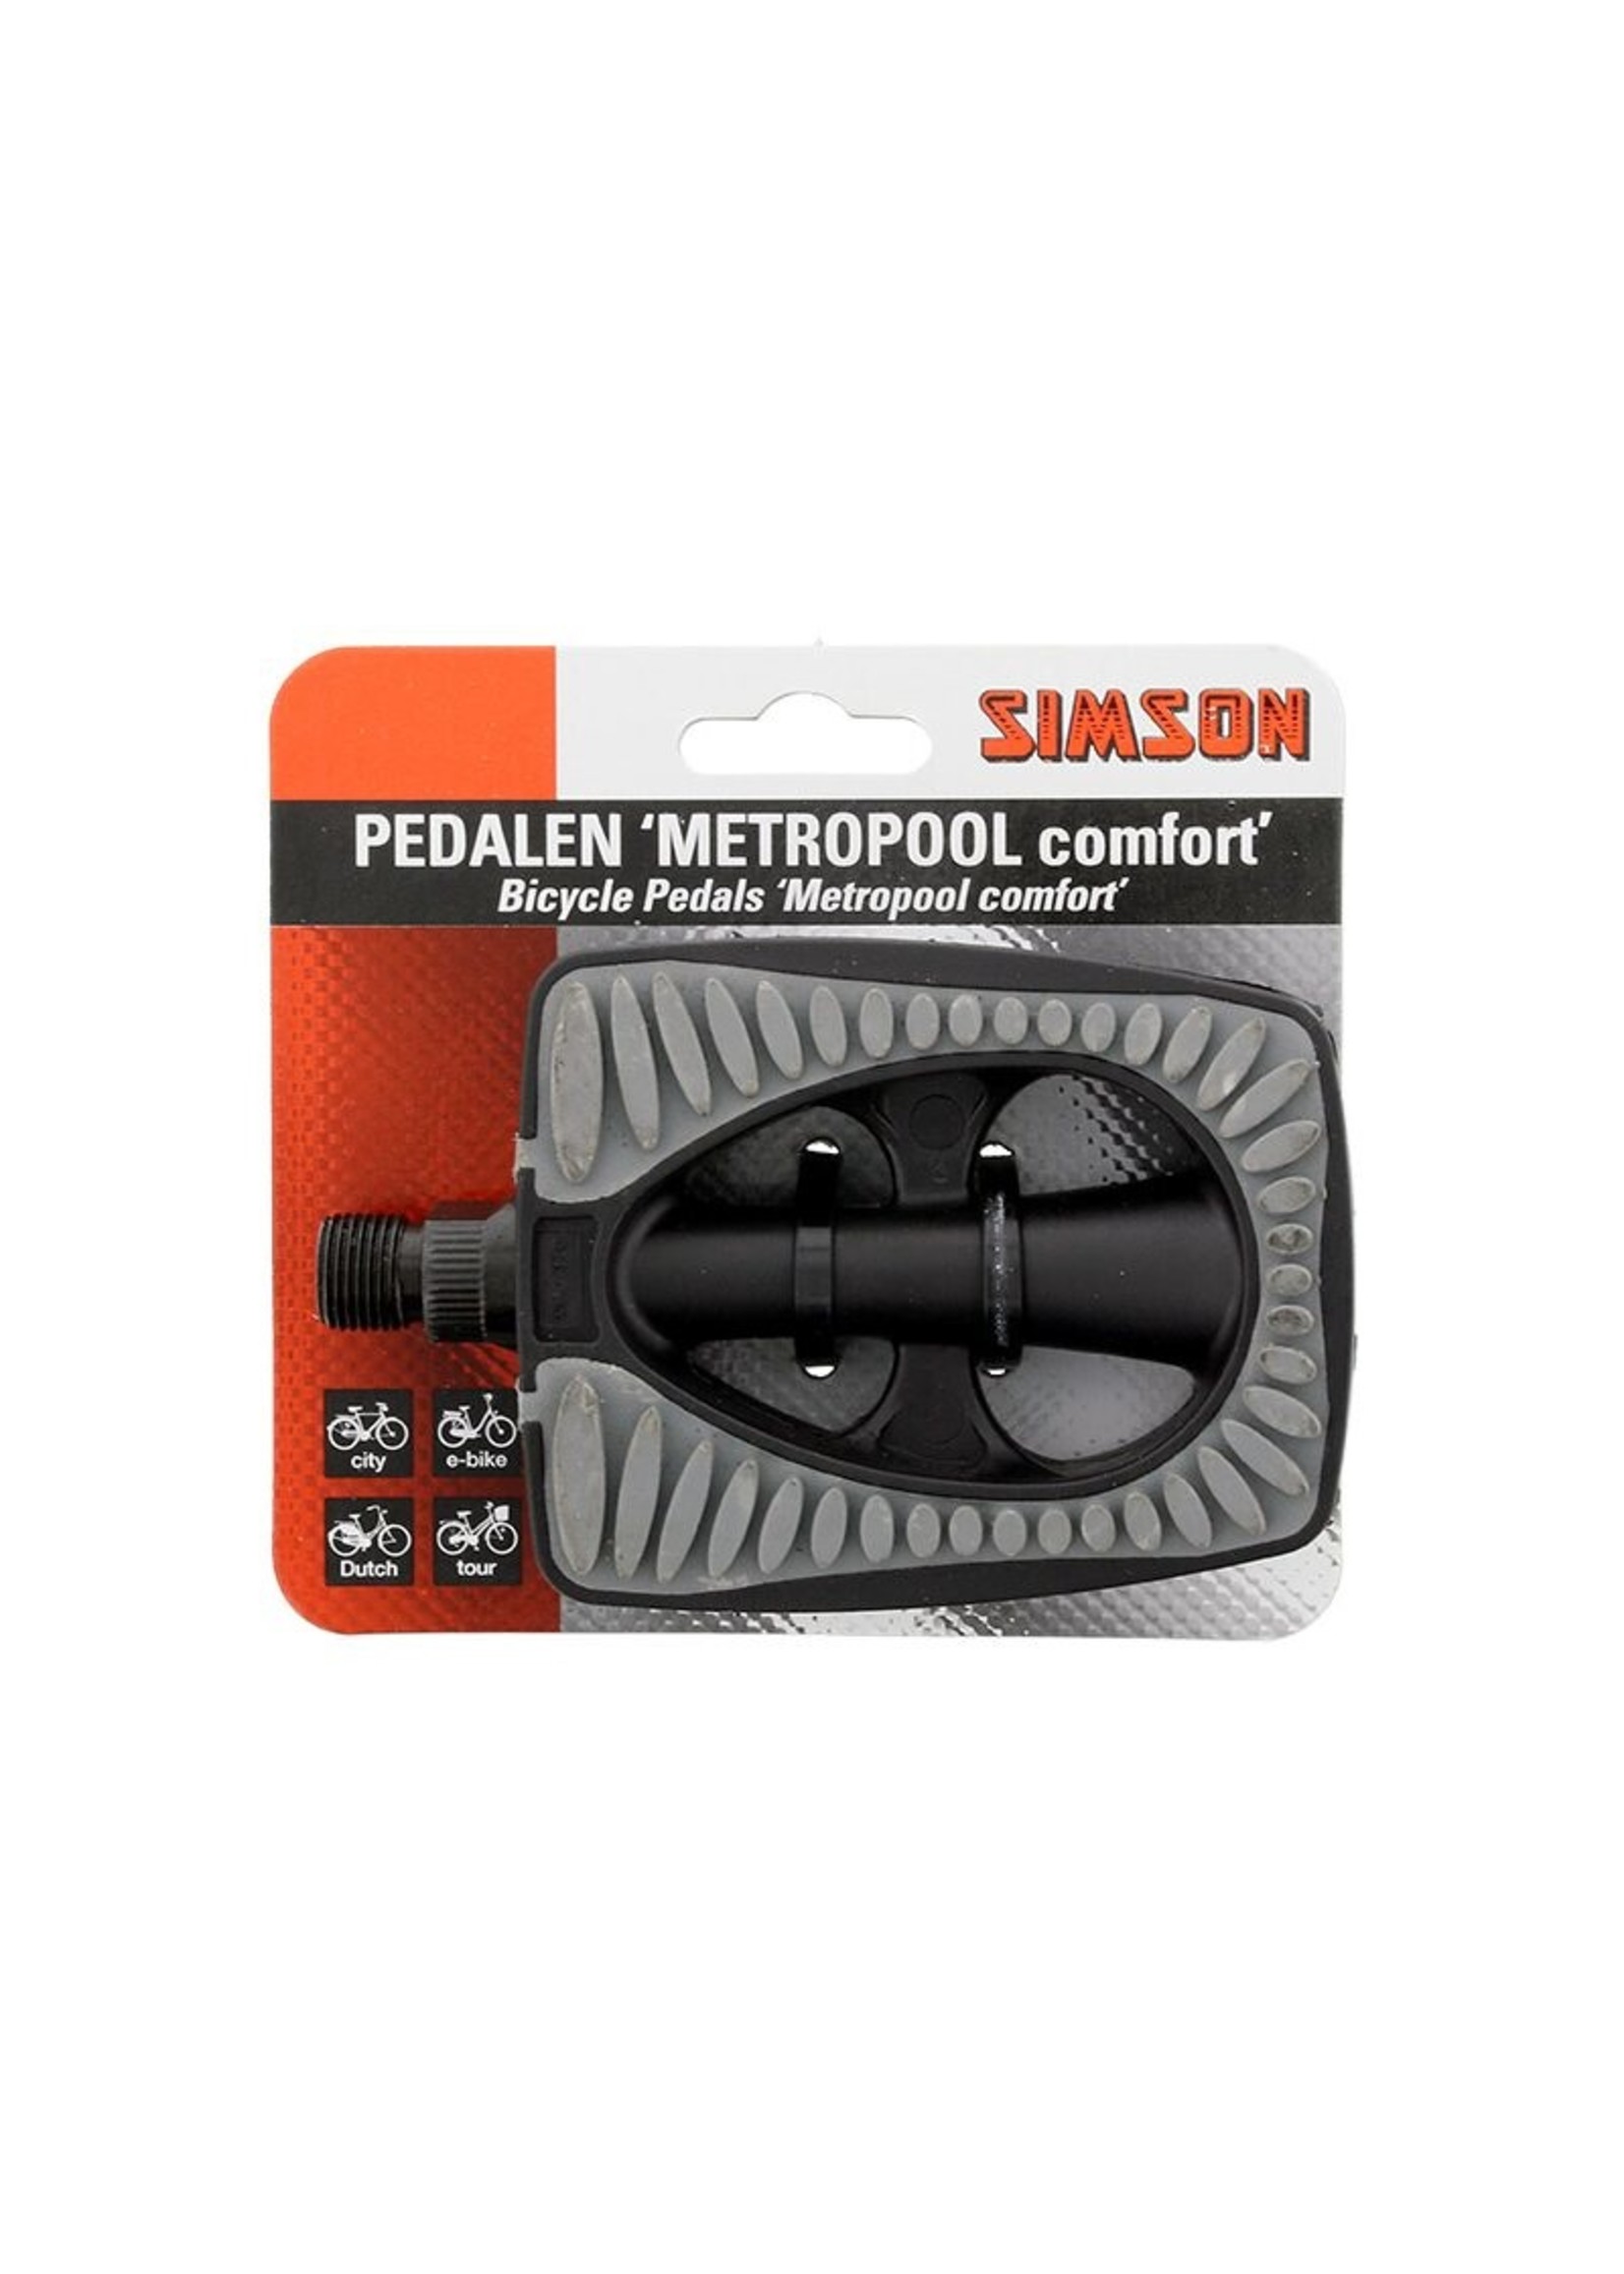 Simson - Pedalen Metropool comfort